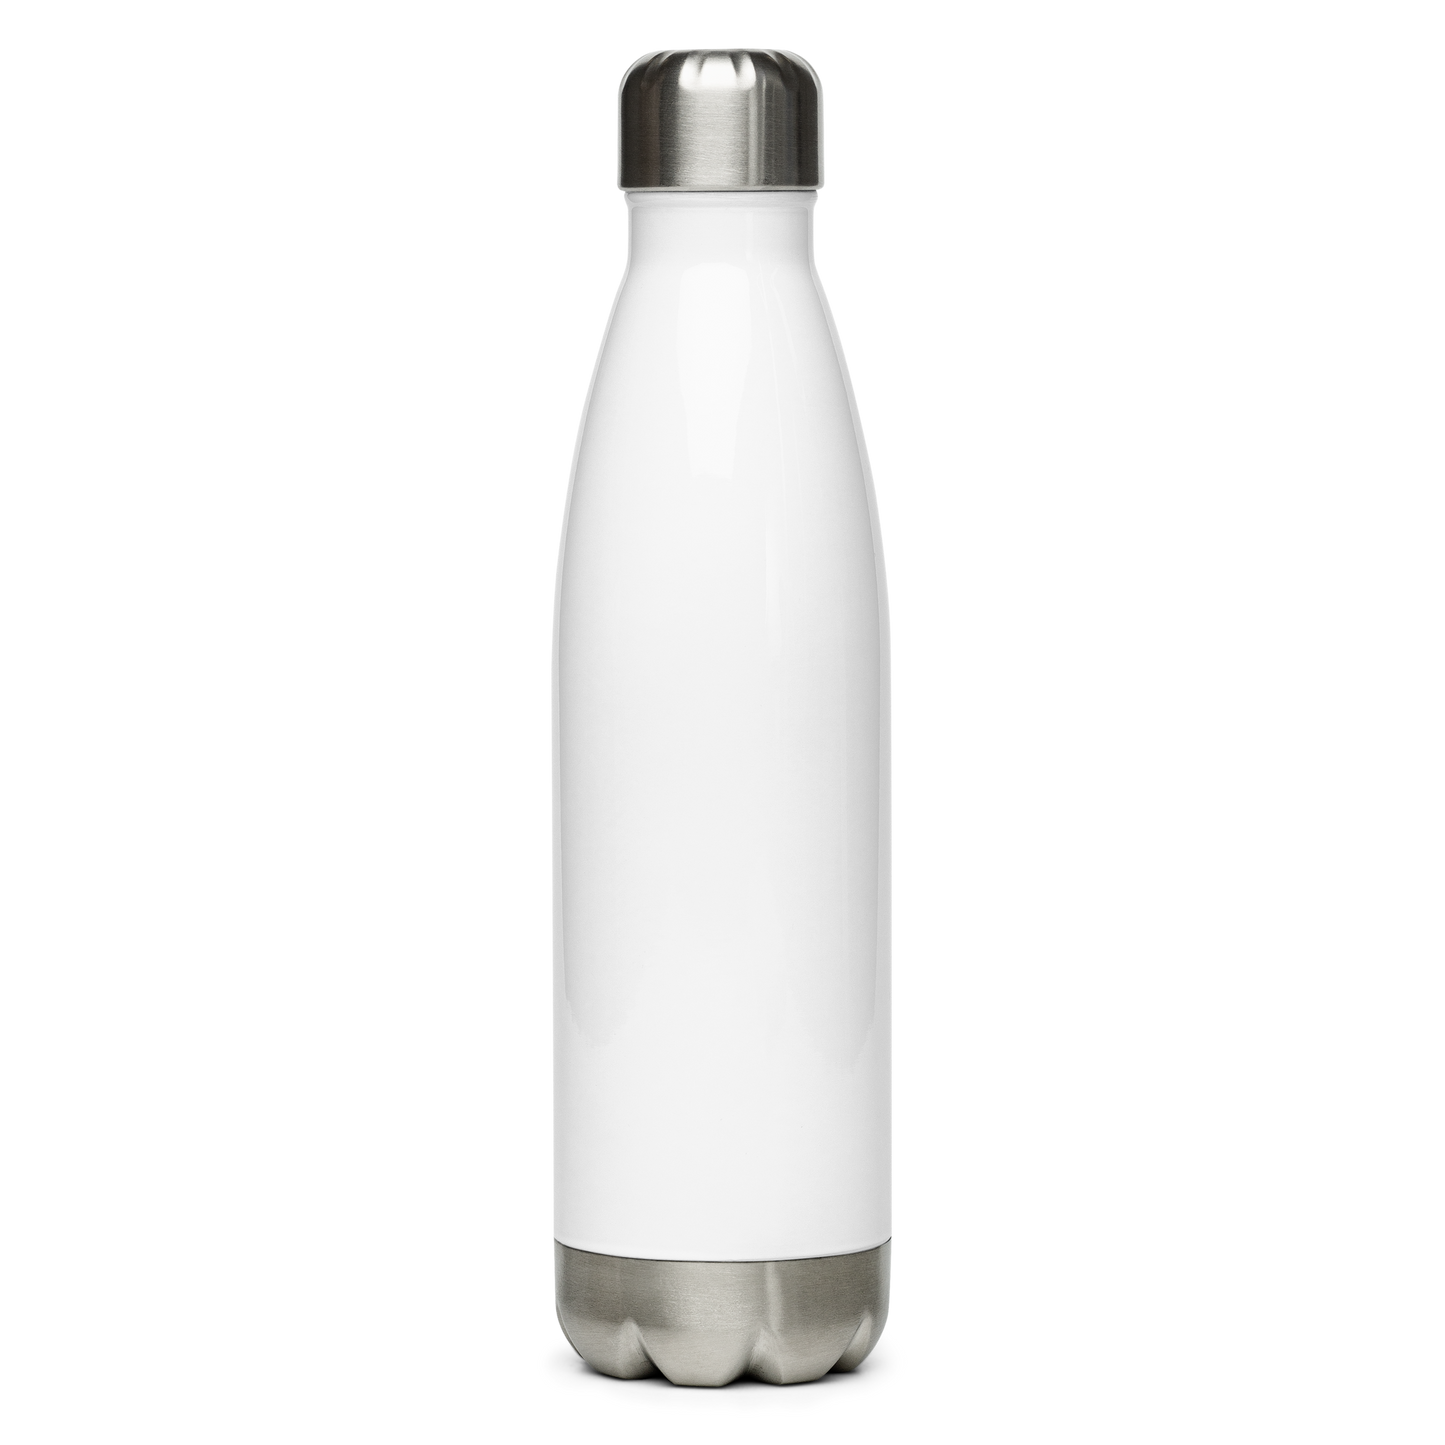 Del Norte Football Stainless steel water bottle